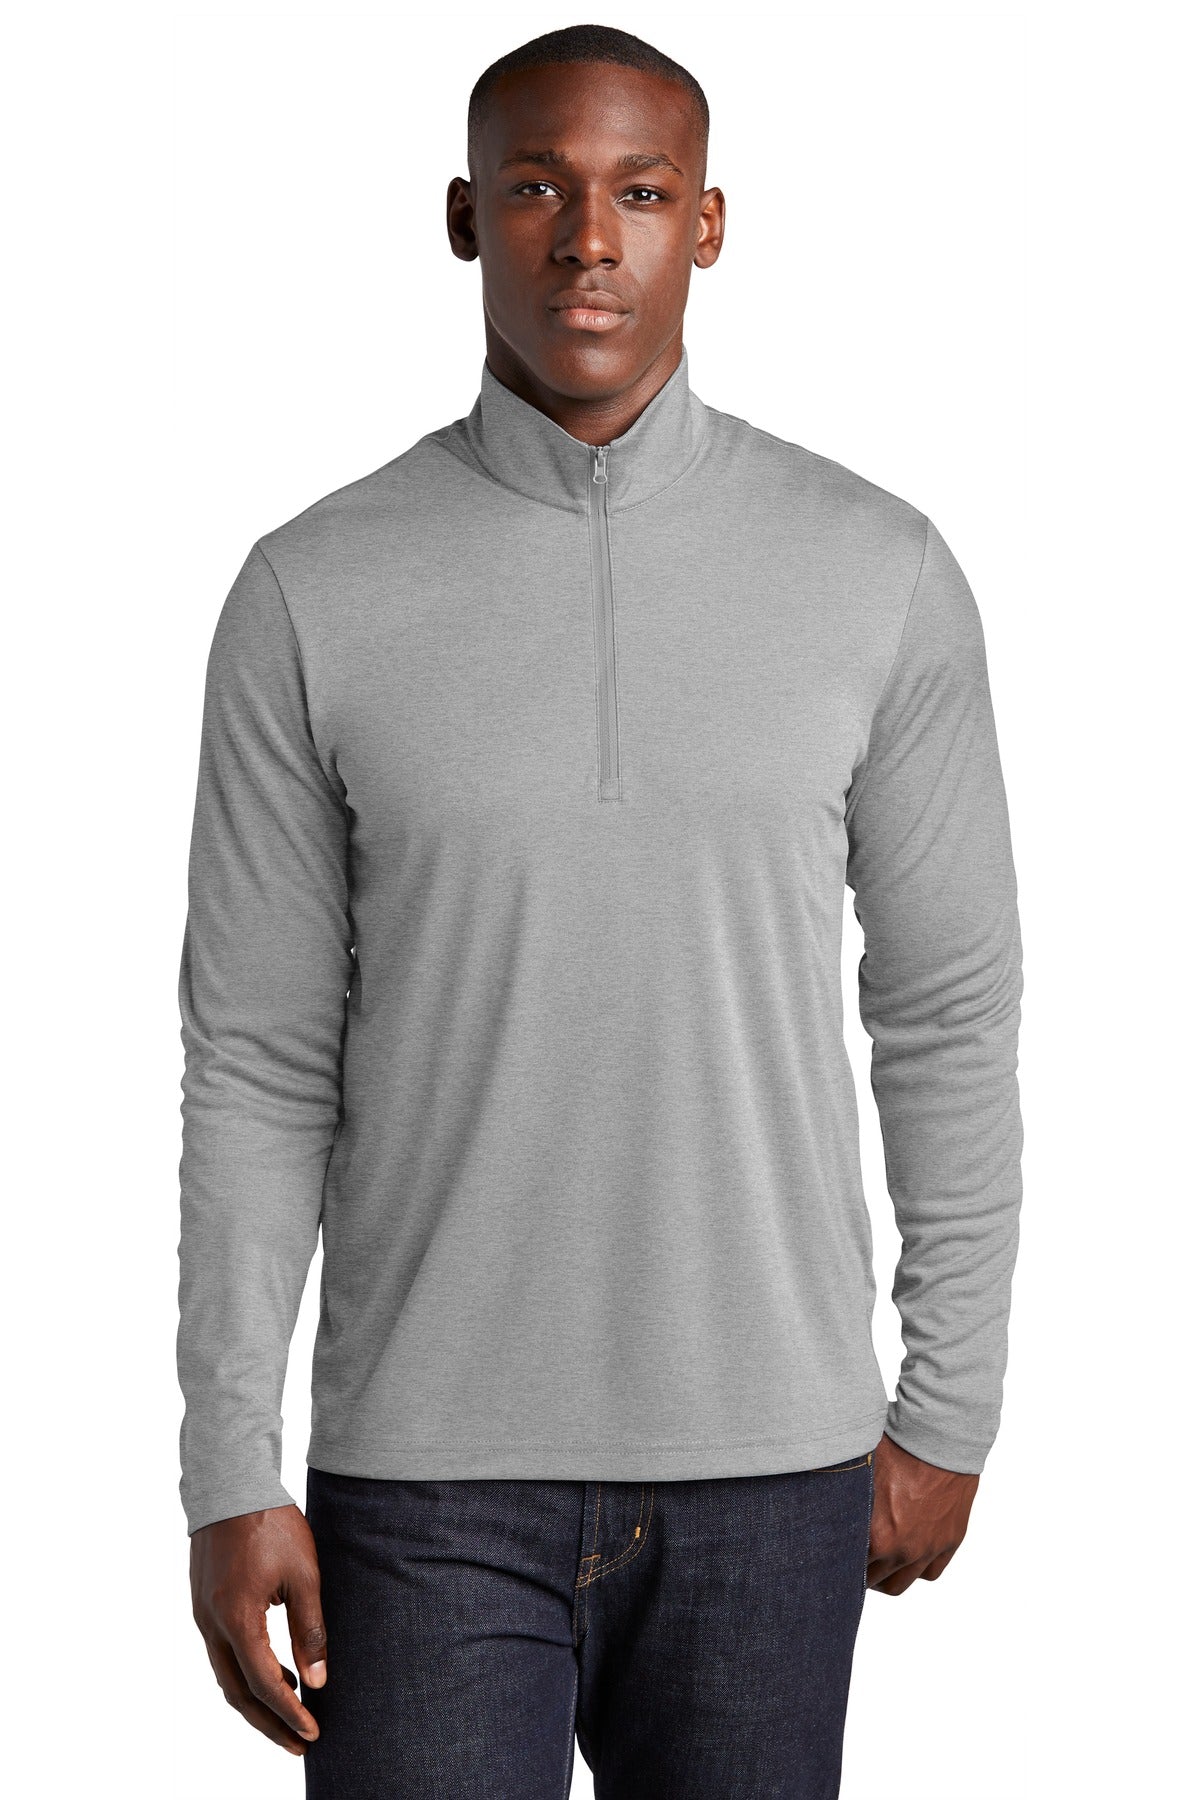 Sweatshirts/Fleece Light Grey Heather Sport-Tek